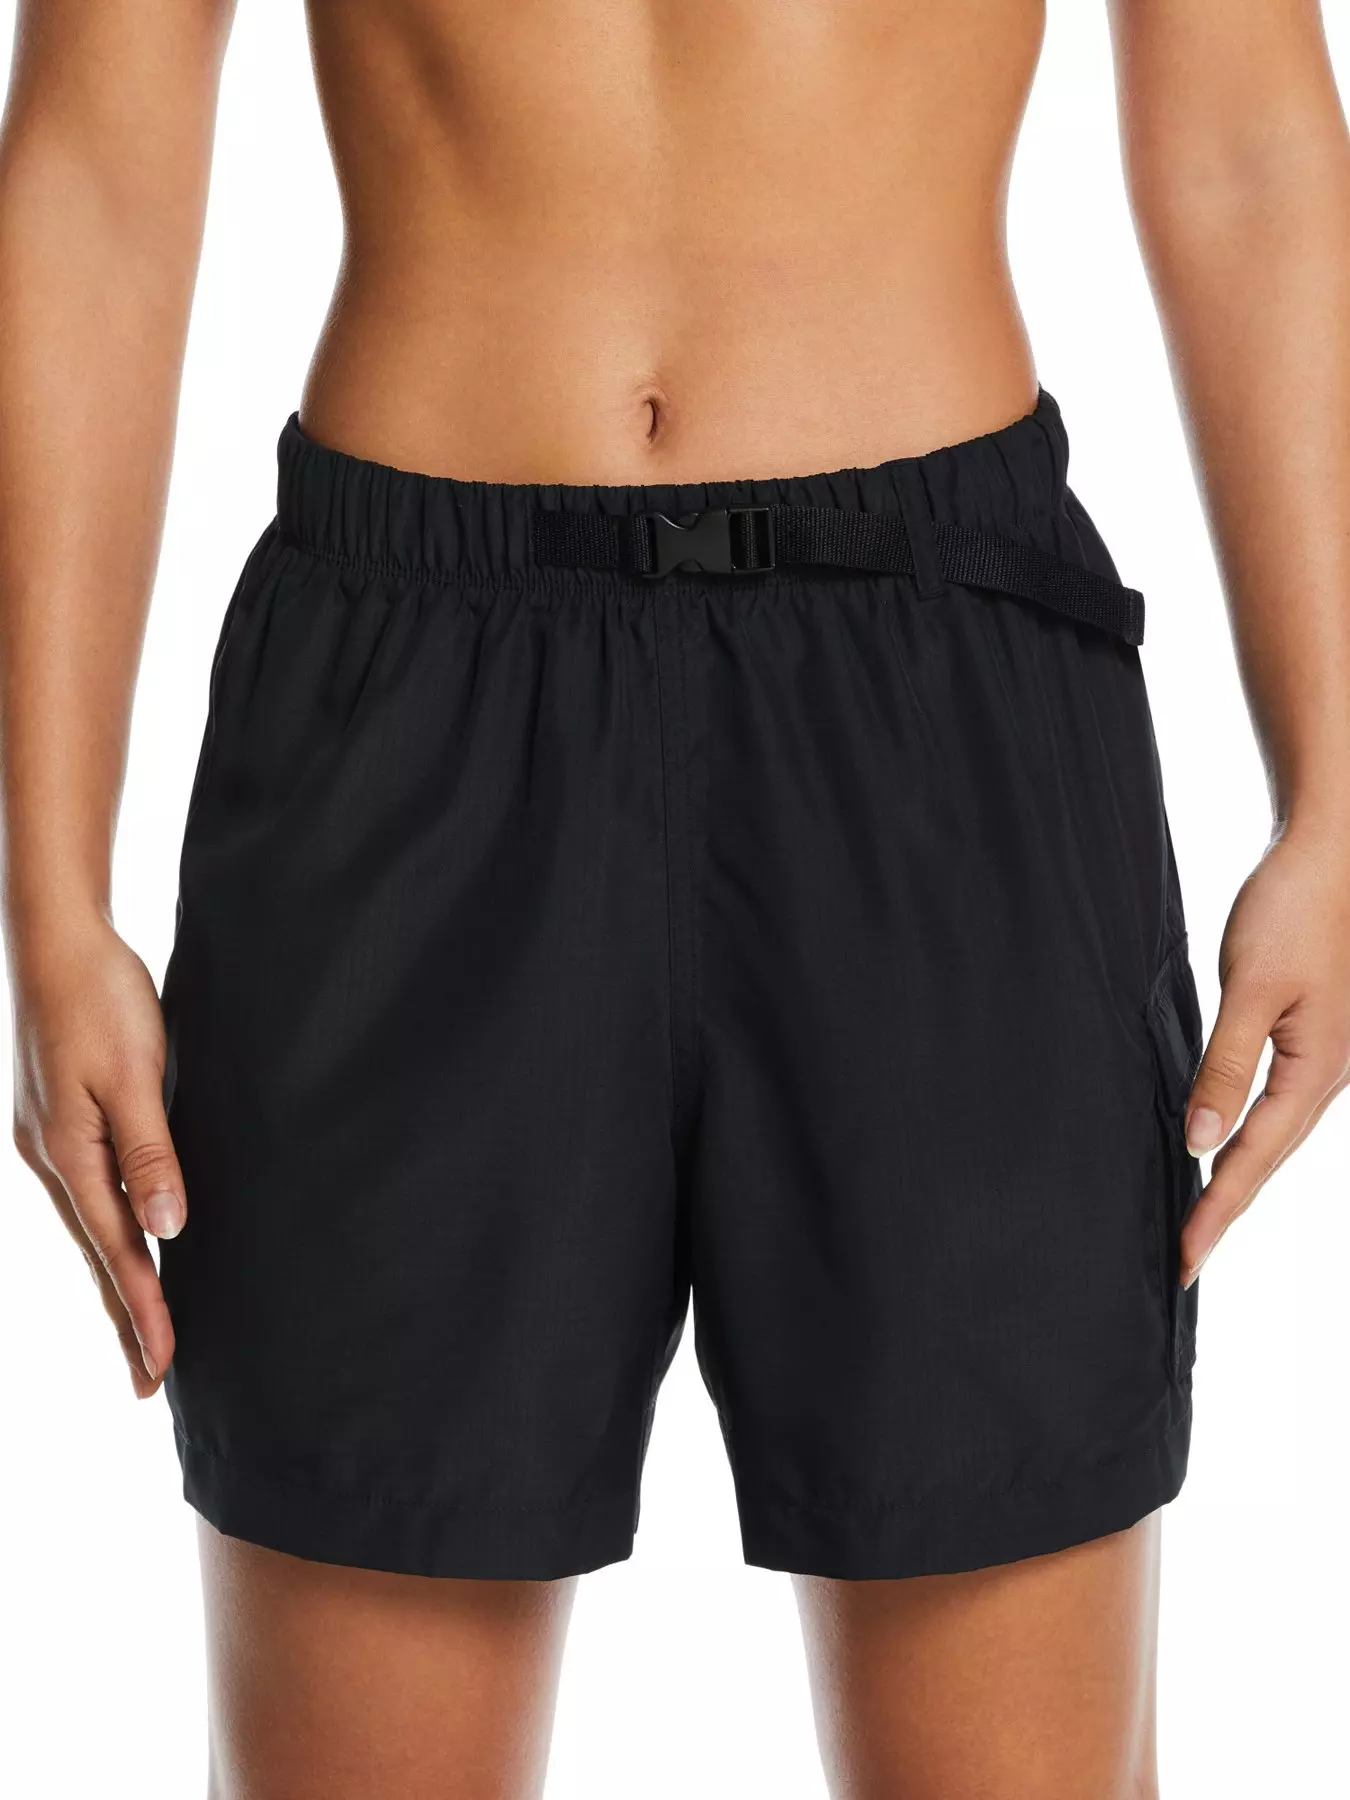 Nike Sportswear Club Fleece Shorts Grey CV8651-063 Women's Medium